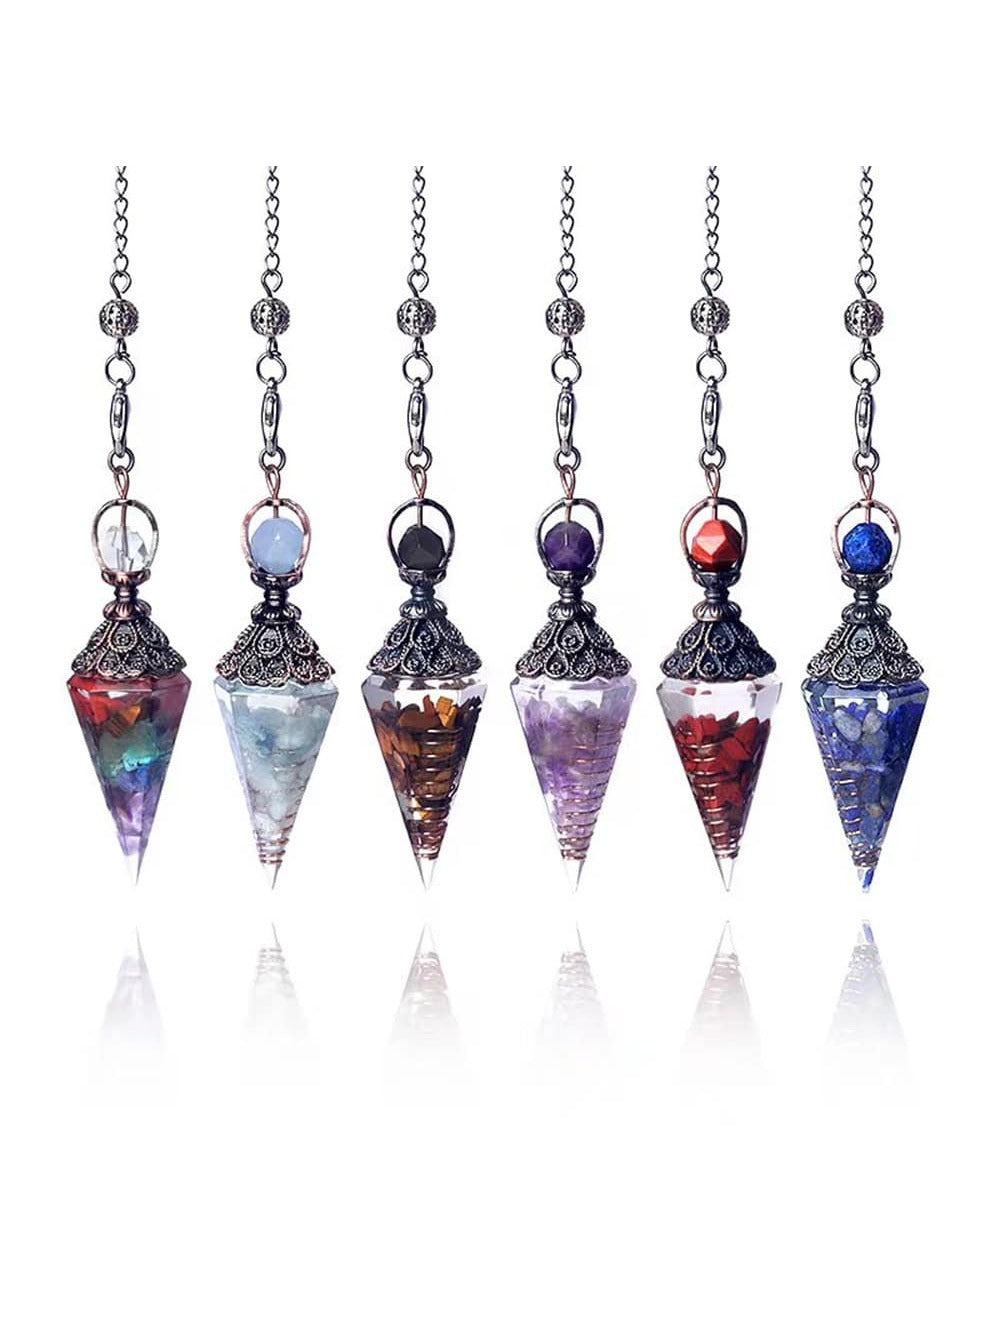 Crystals Stone Pyramid Pendulum Pendant, Hanging Ornament Multi Color Gemstone 1pc